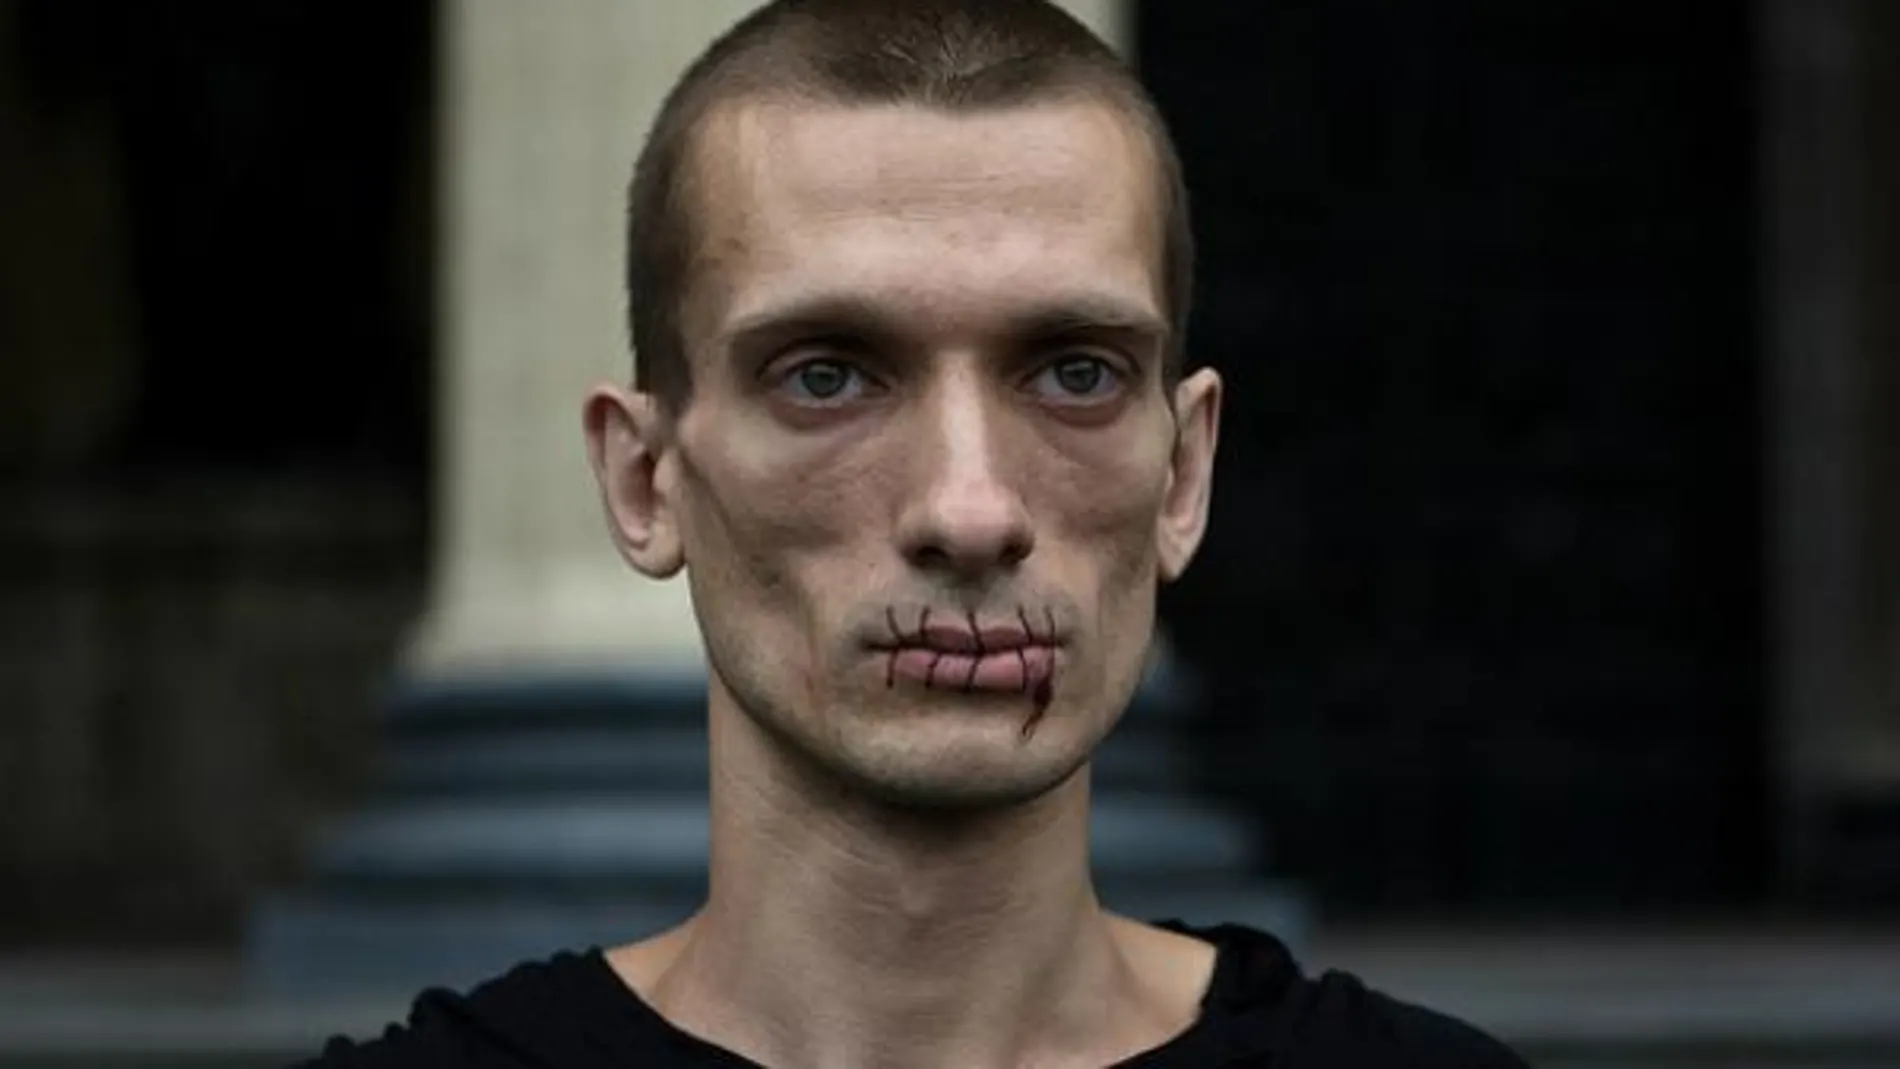 Imagen de Pavlenski con la boca cosida como símbolo de protesta